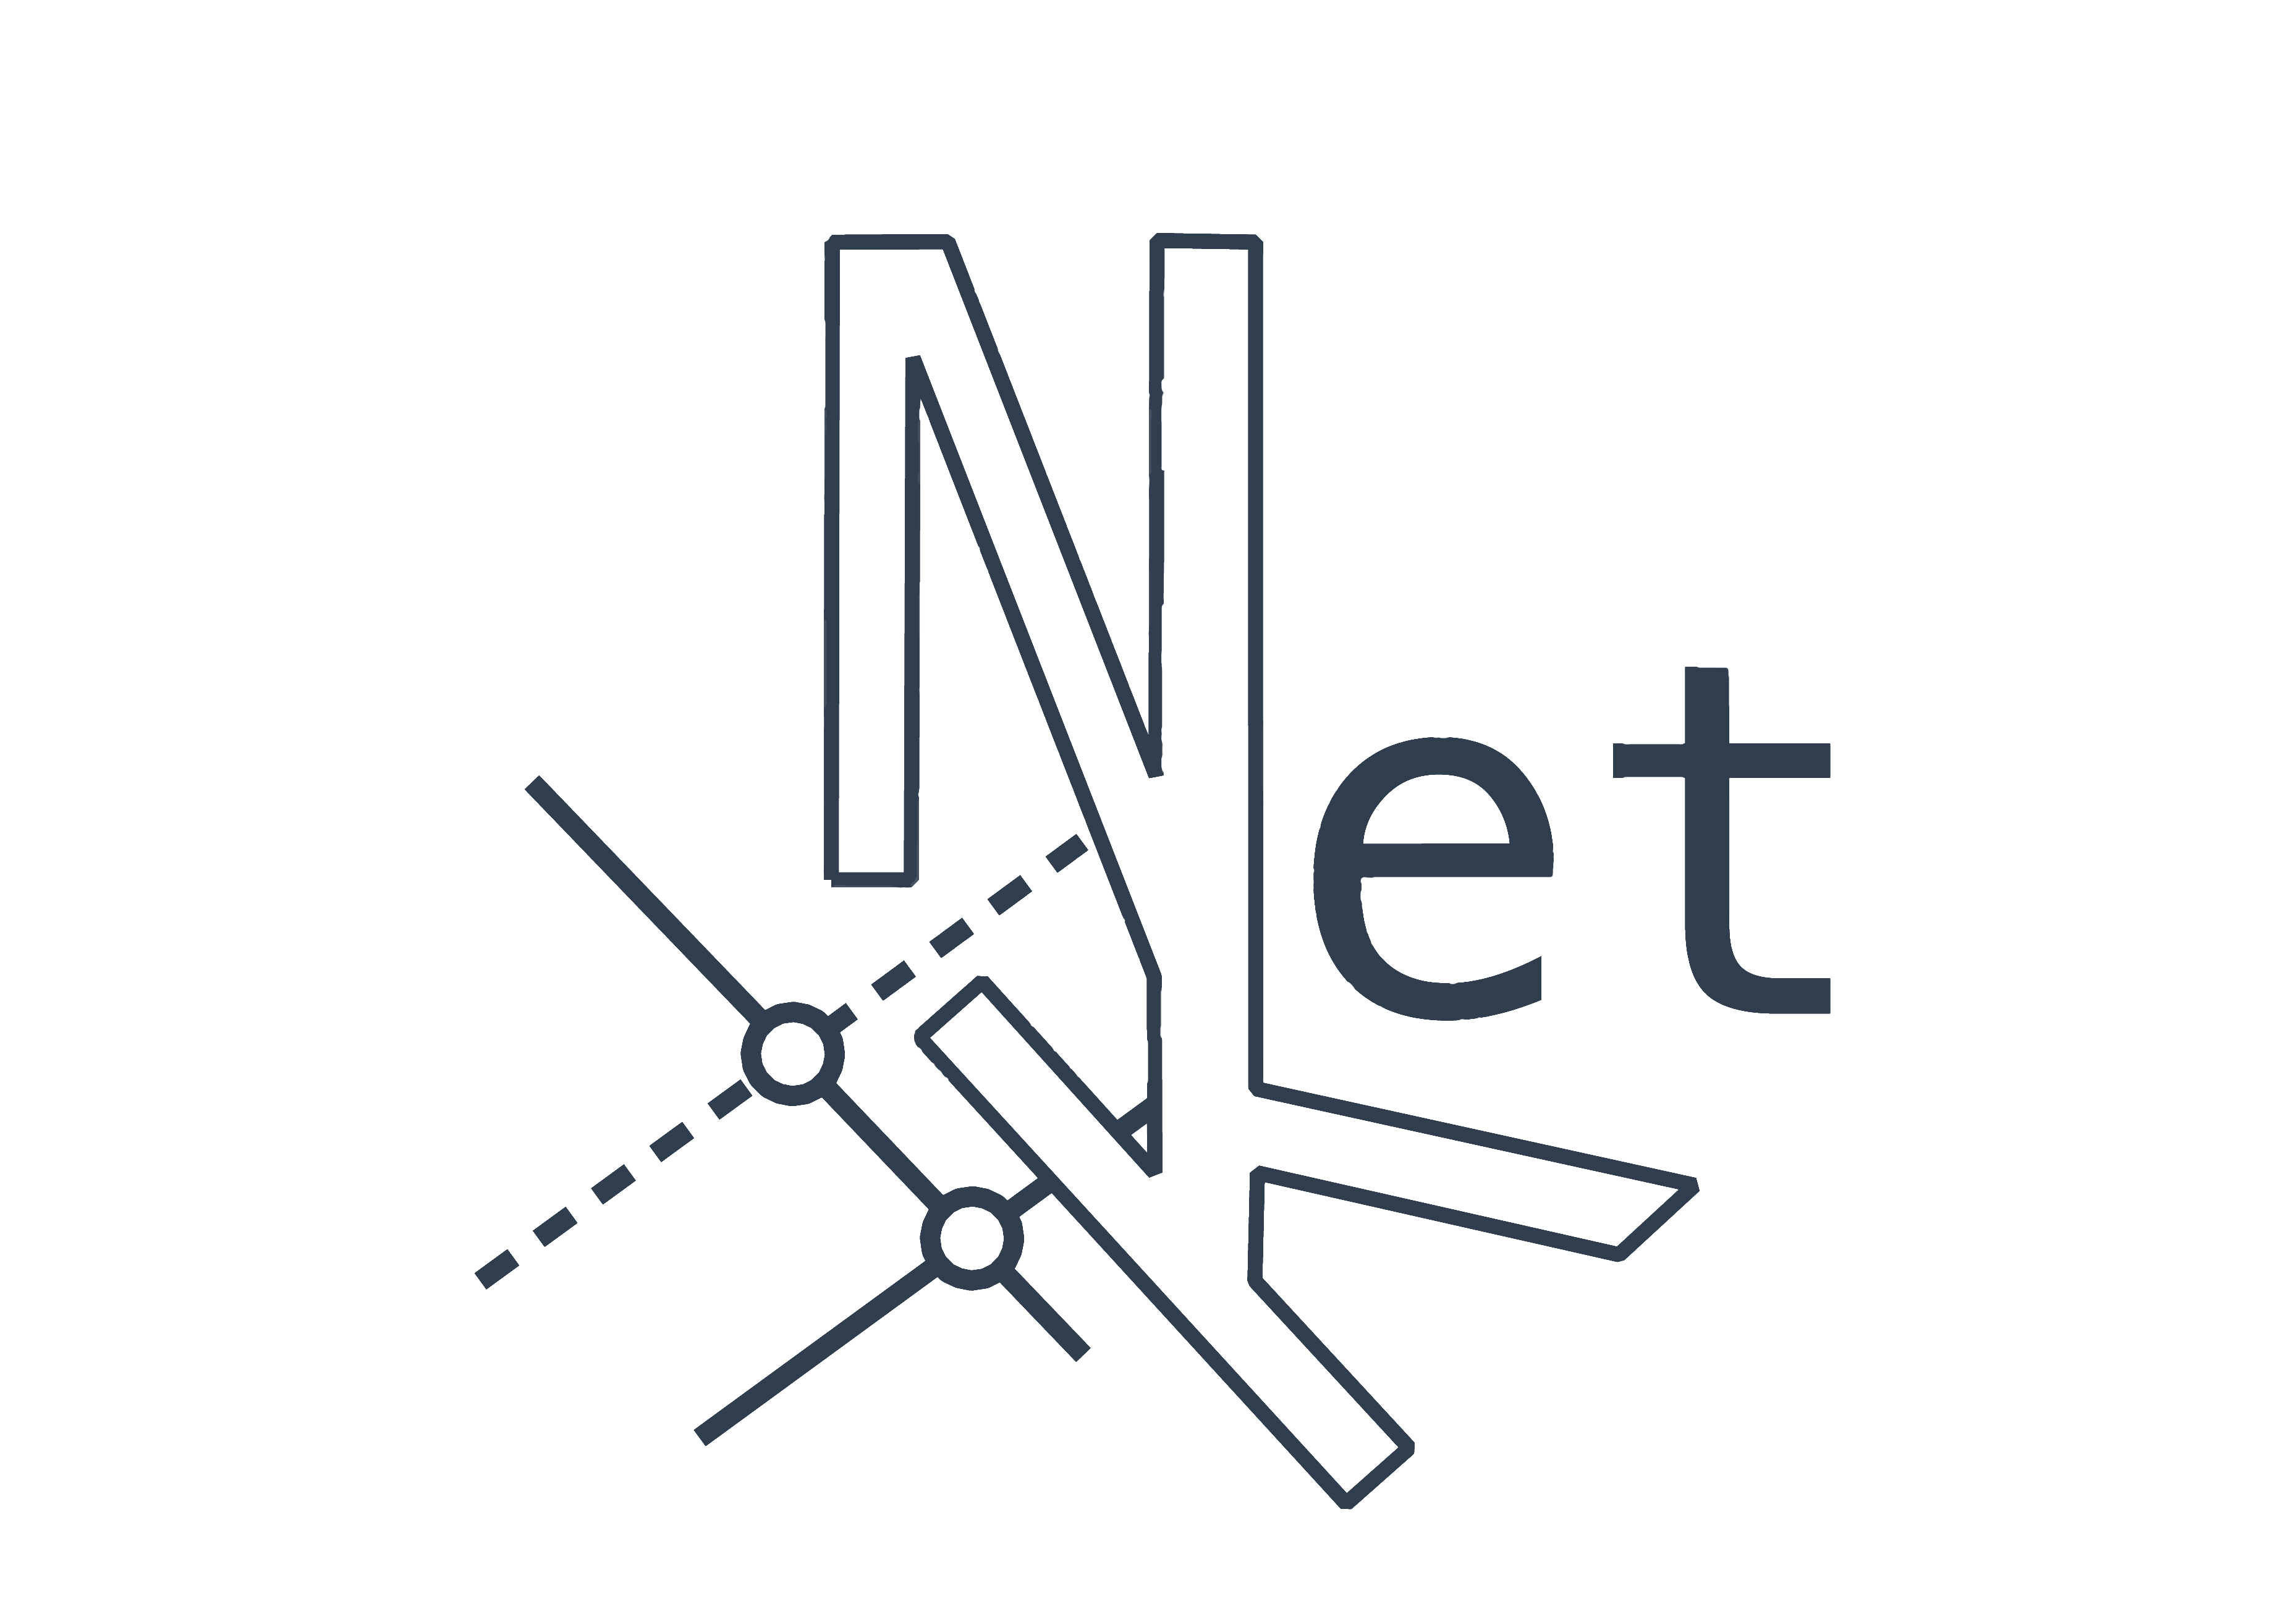 NetKet - Home